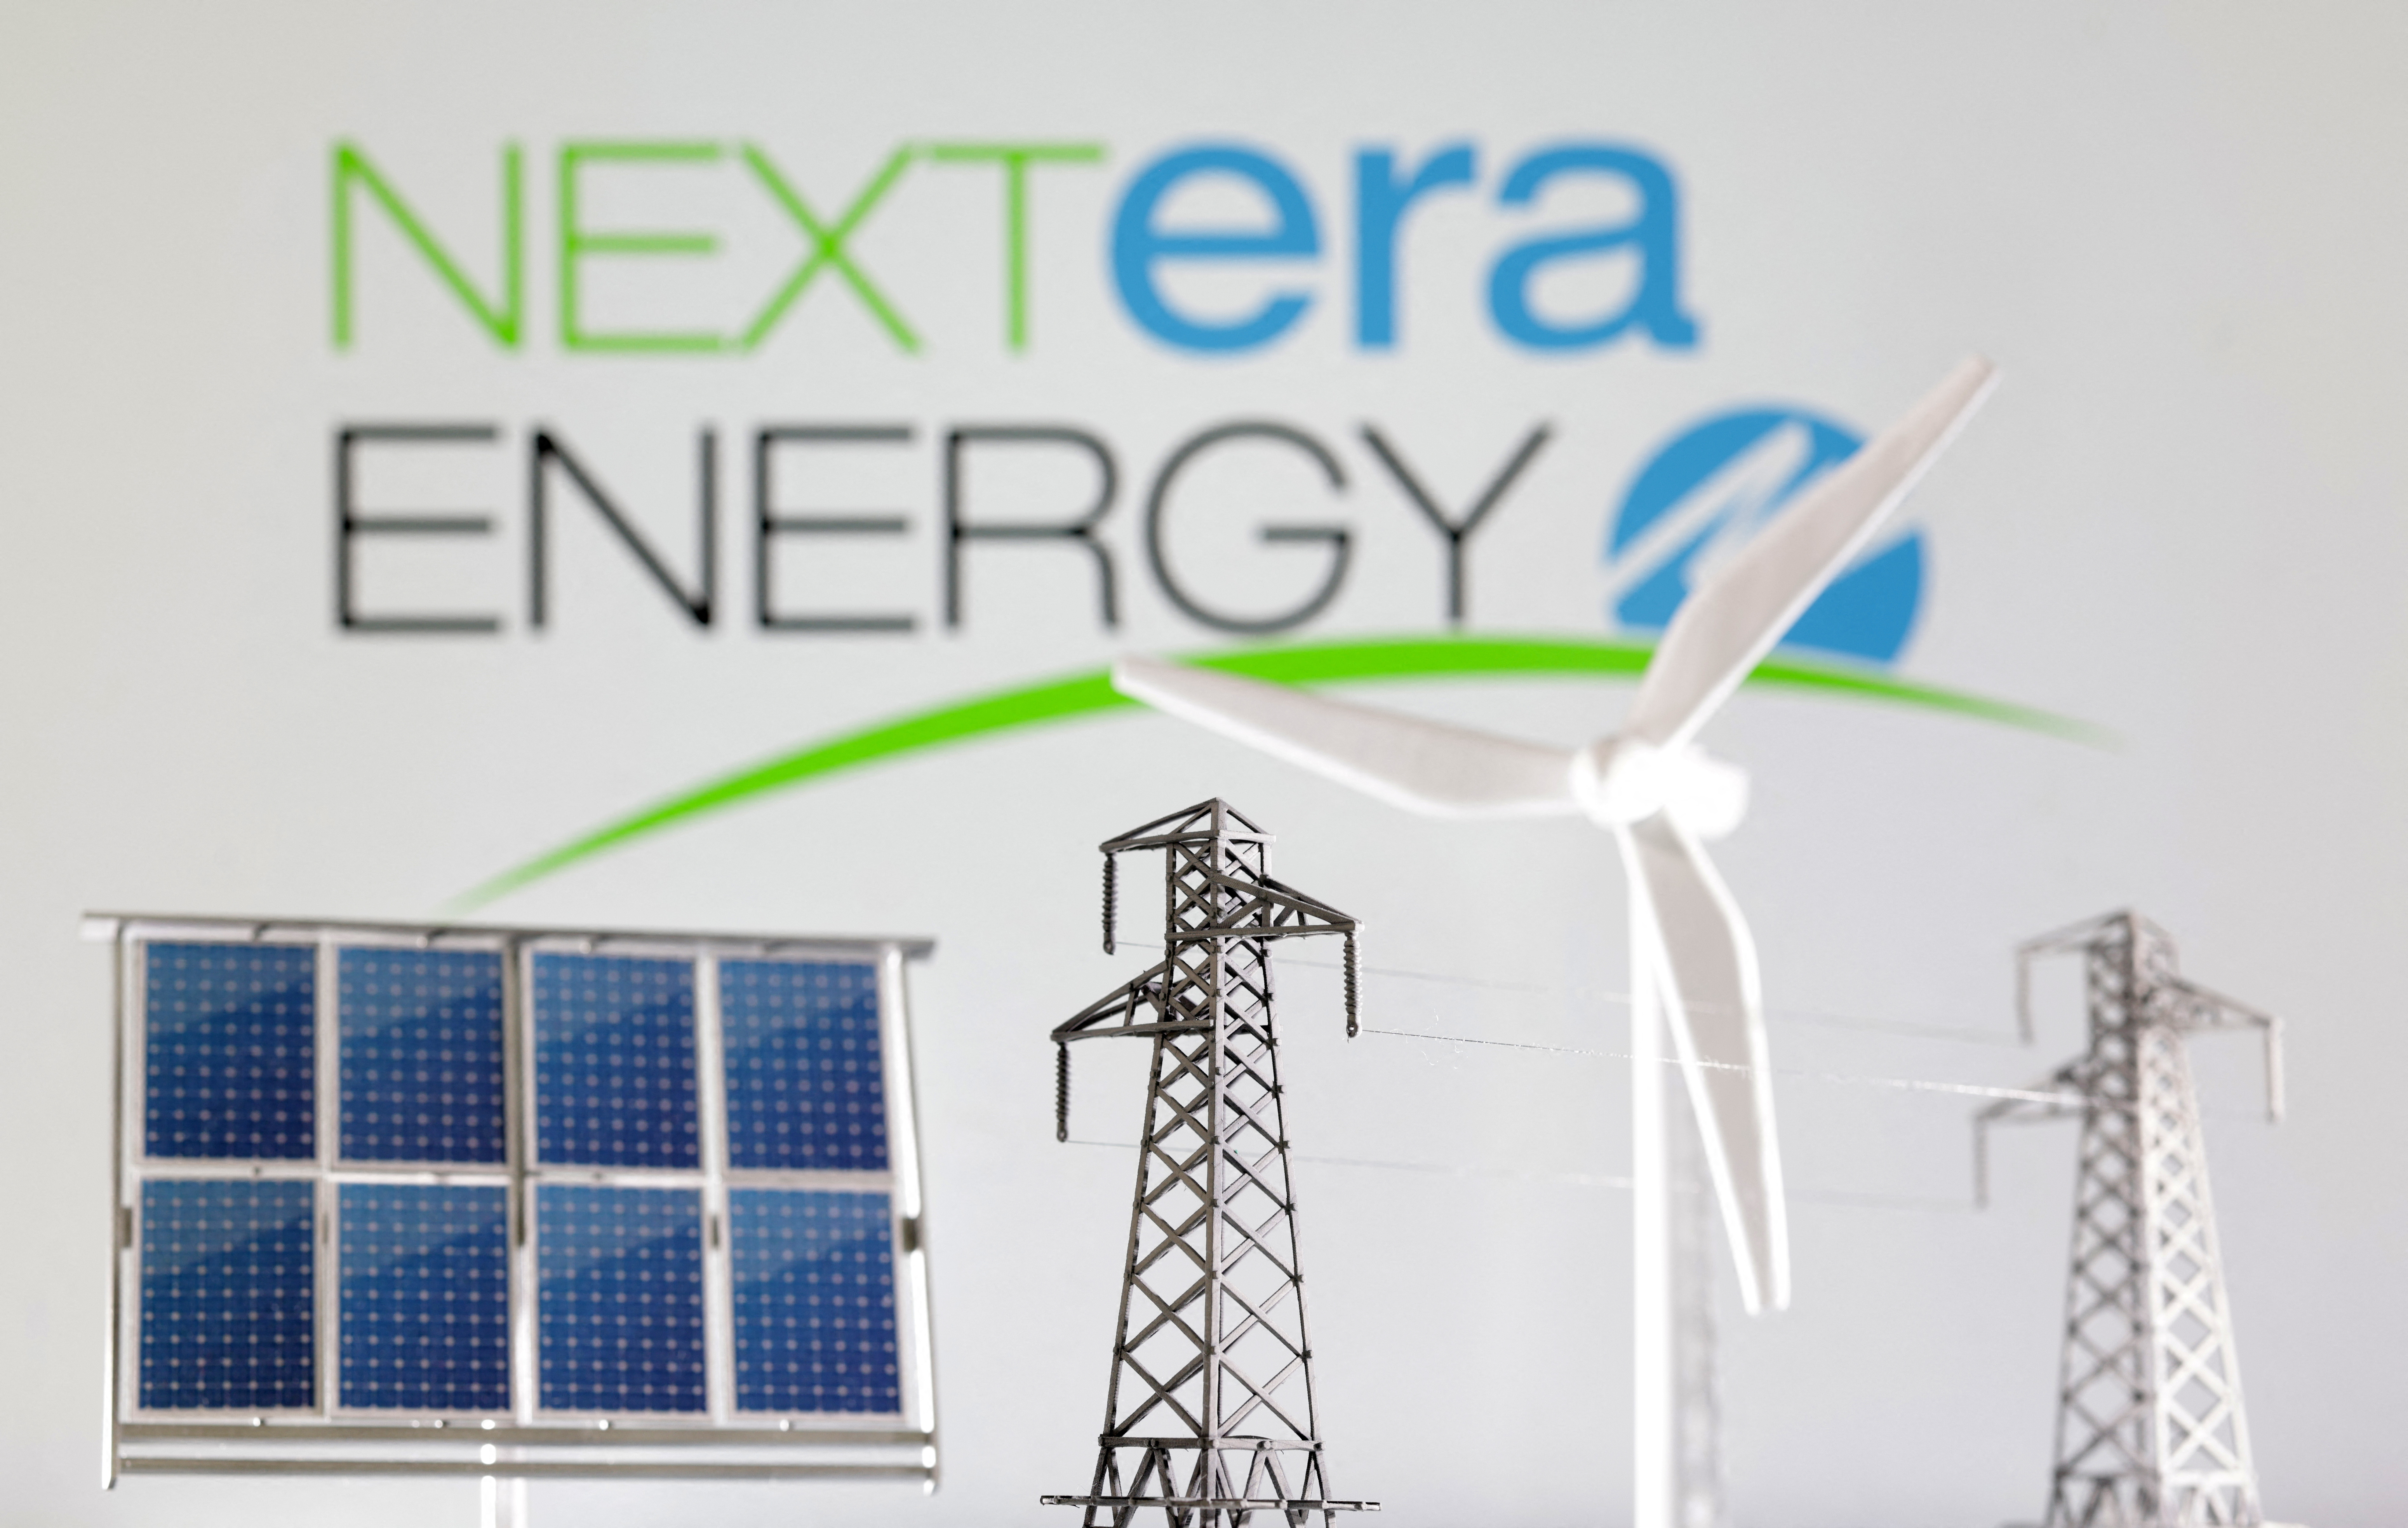 Illustration shows NextEra Energy logo